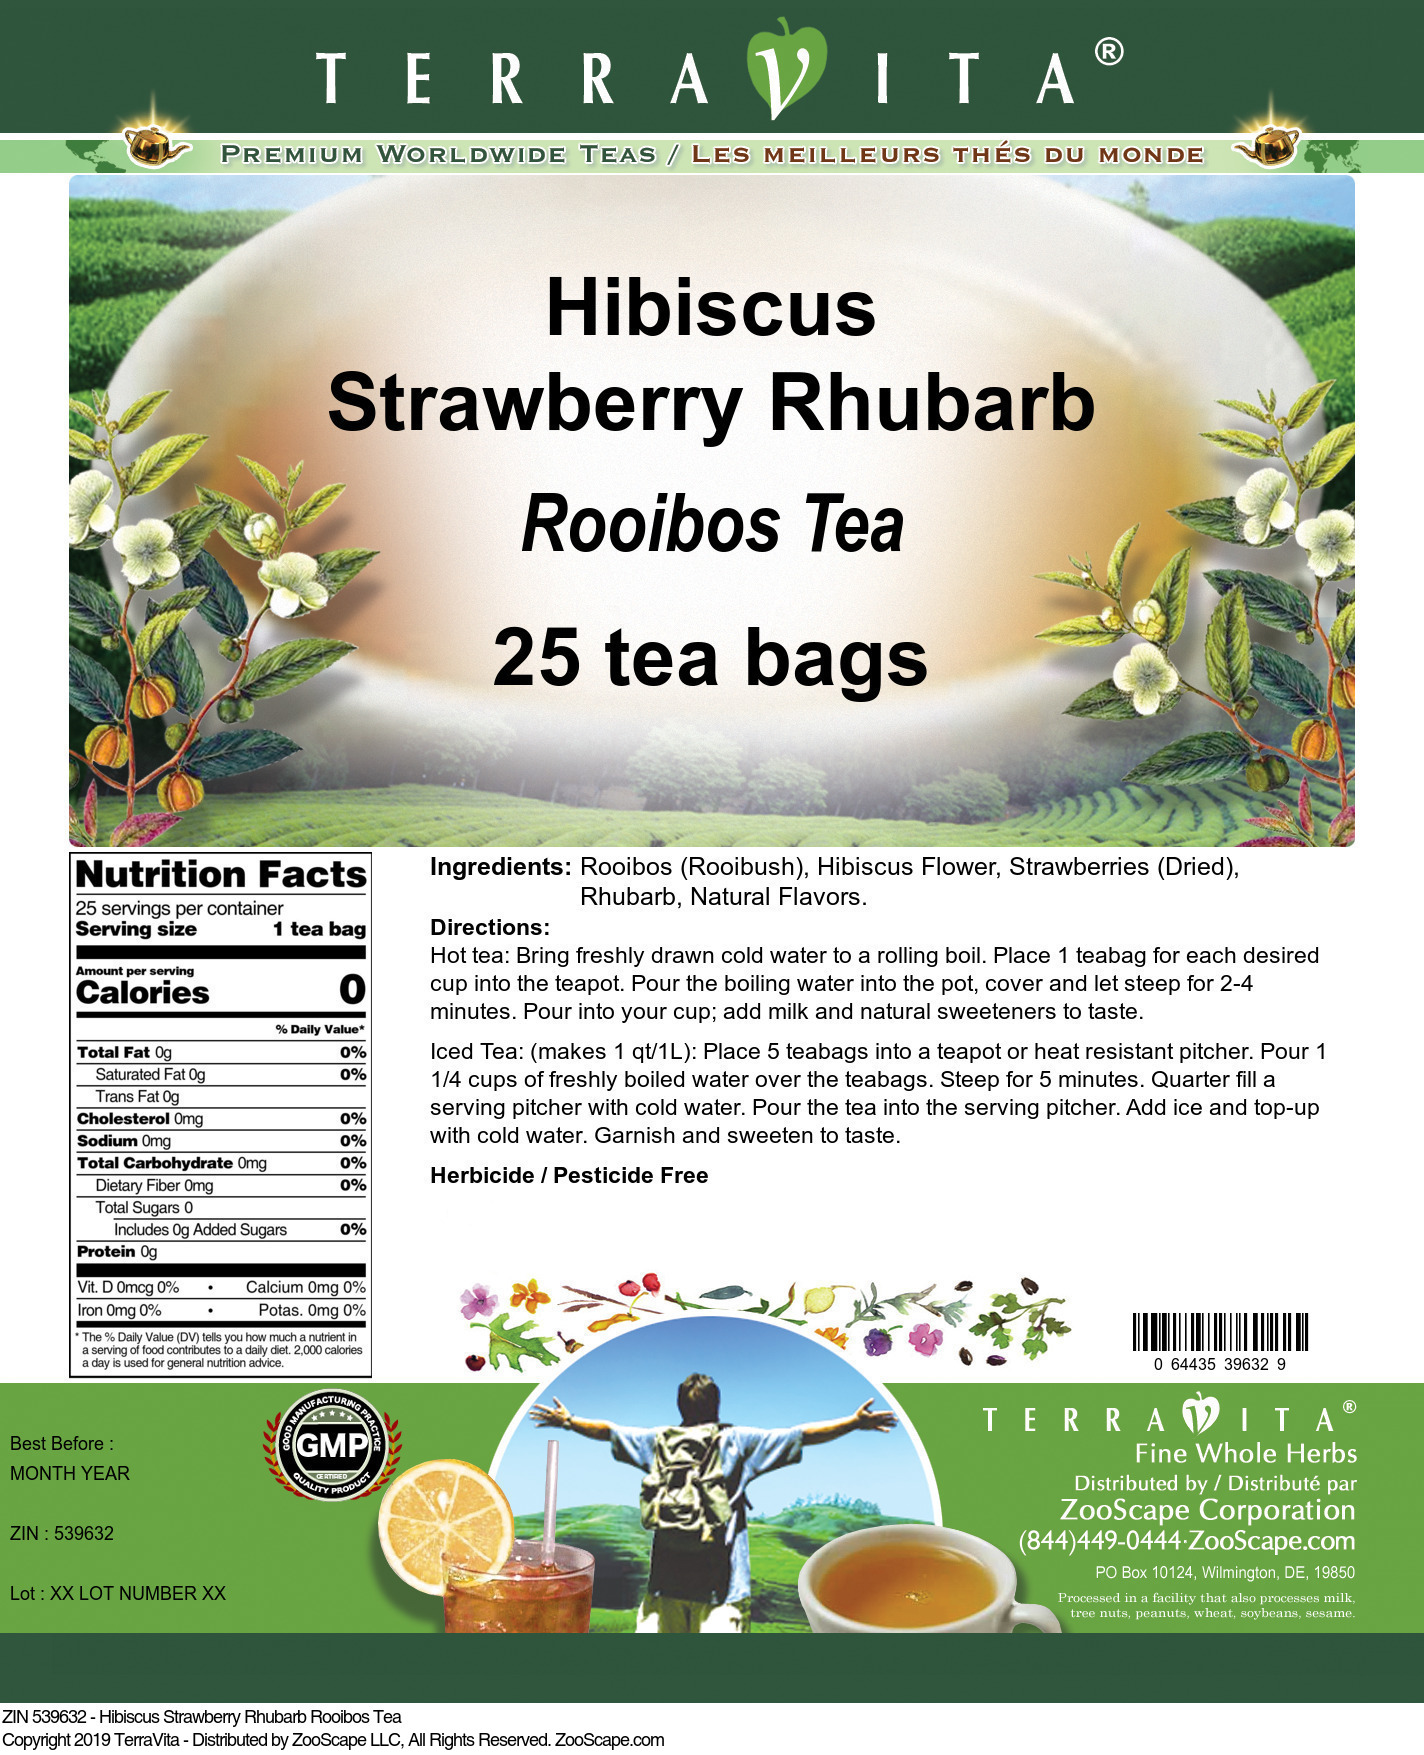 Hibiscus Strawberry Rhubarb Rooibos Tea - Label